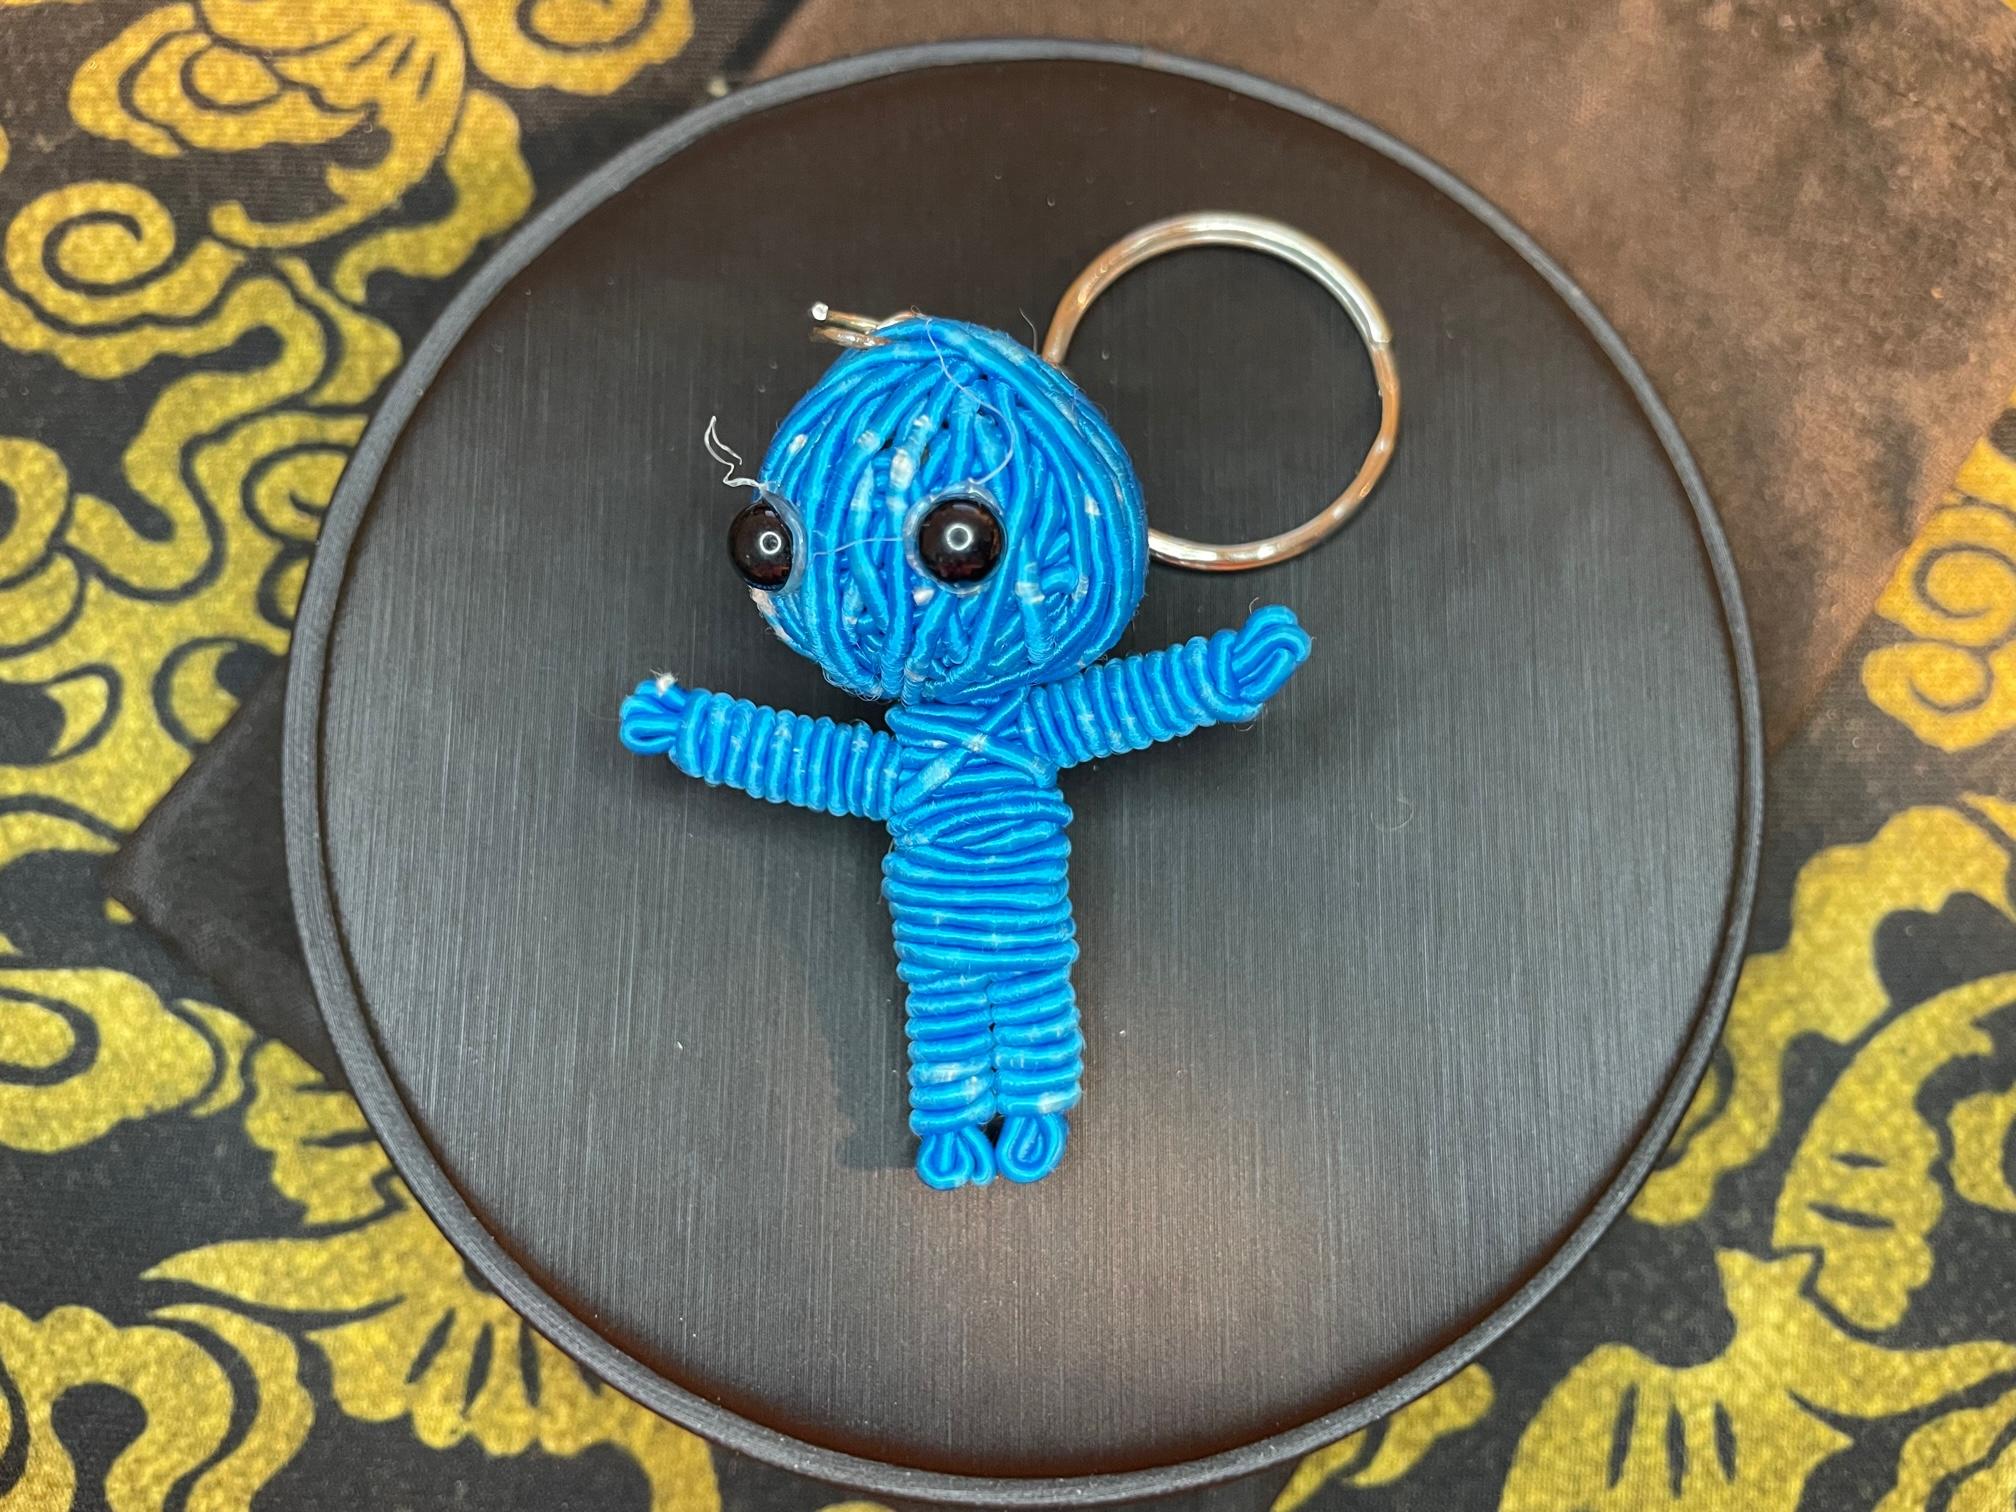 voodoo fiend doll evil eye supernatural spiritual hex handmade pendant keychain